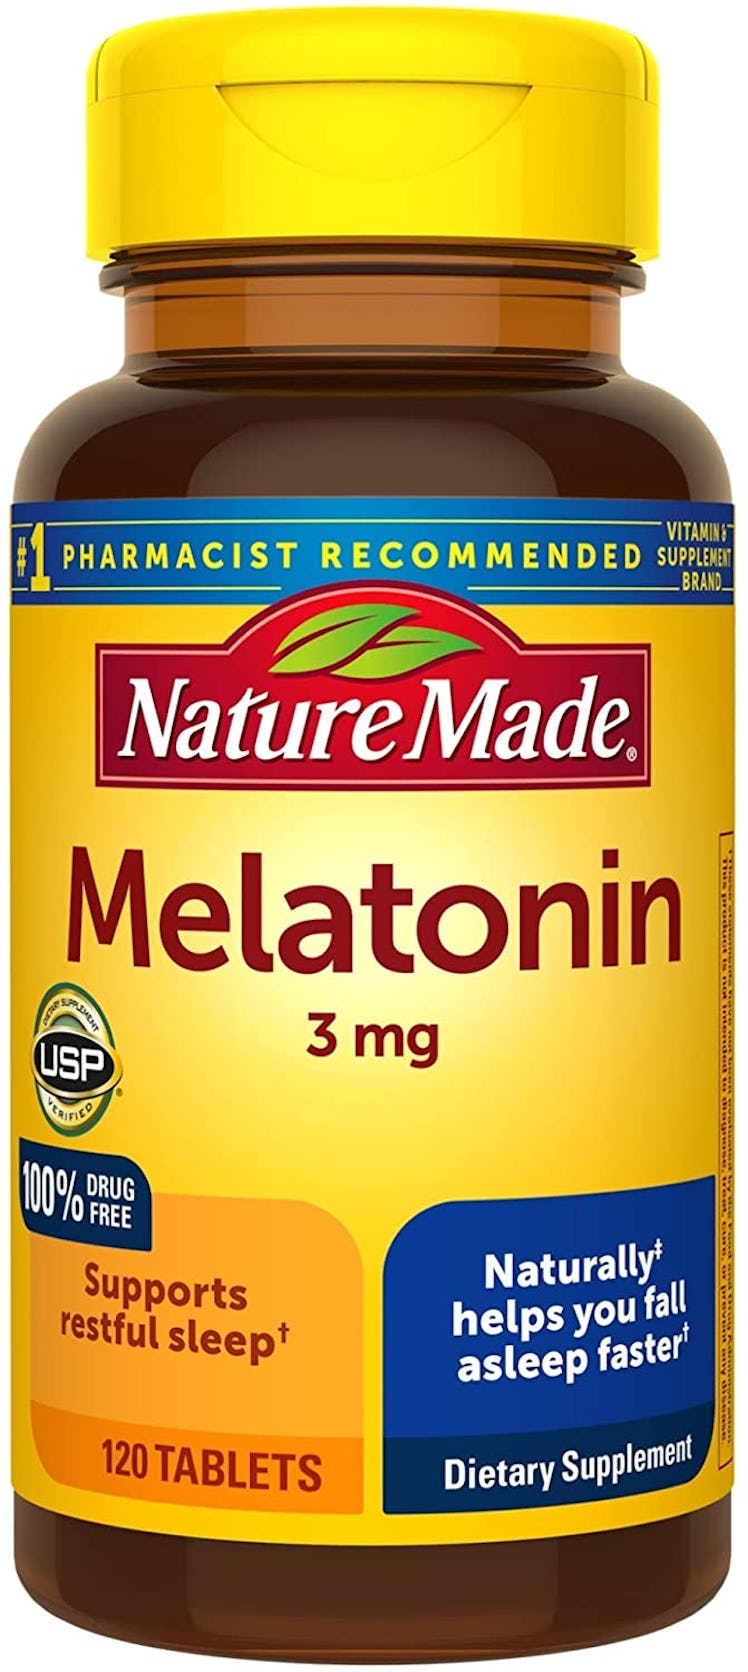 Nature Made Melatonin 3mg Tablets (120-Count)